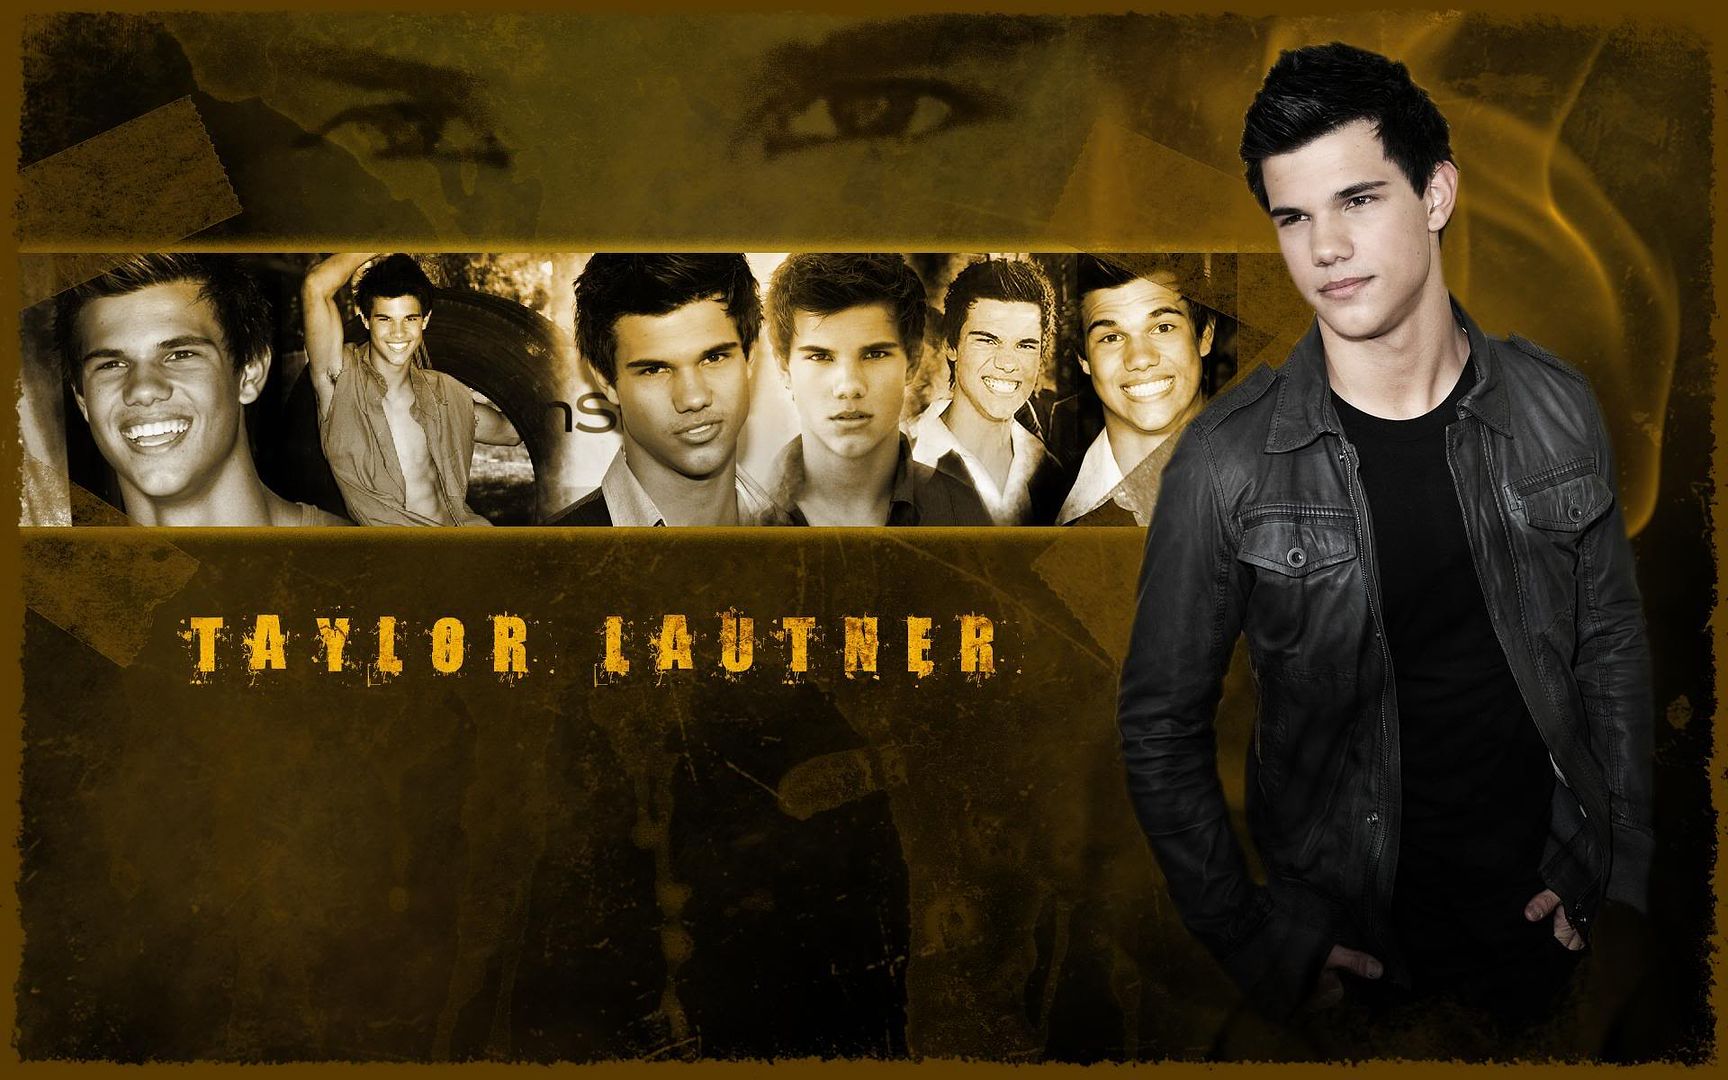 TaylorWallpaper3.jpg Taylor Lautner Wallpaper 3 image by Fridaythe13thFansite